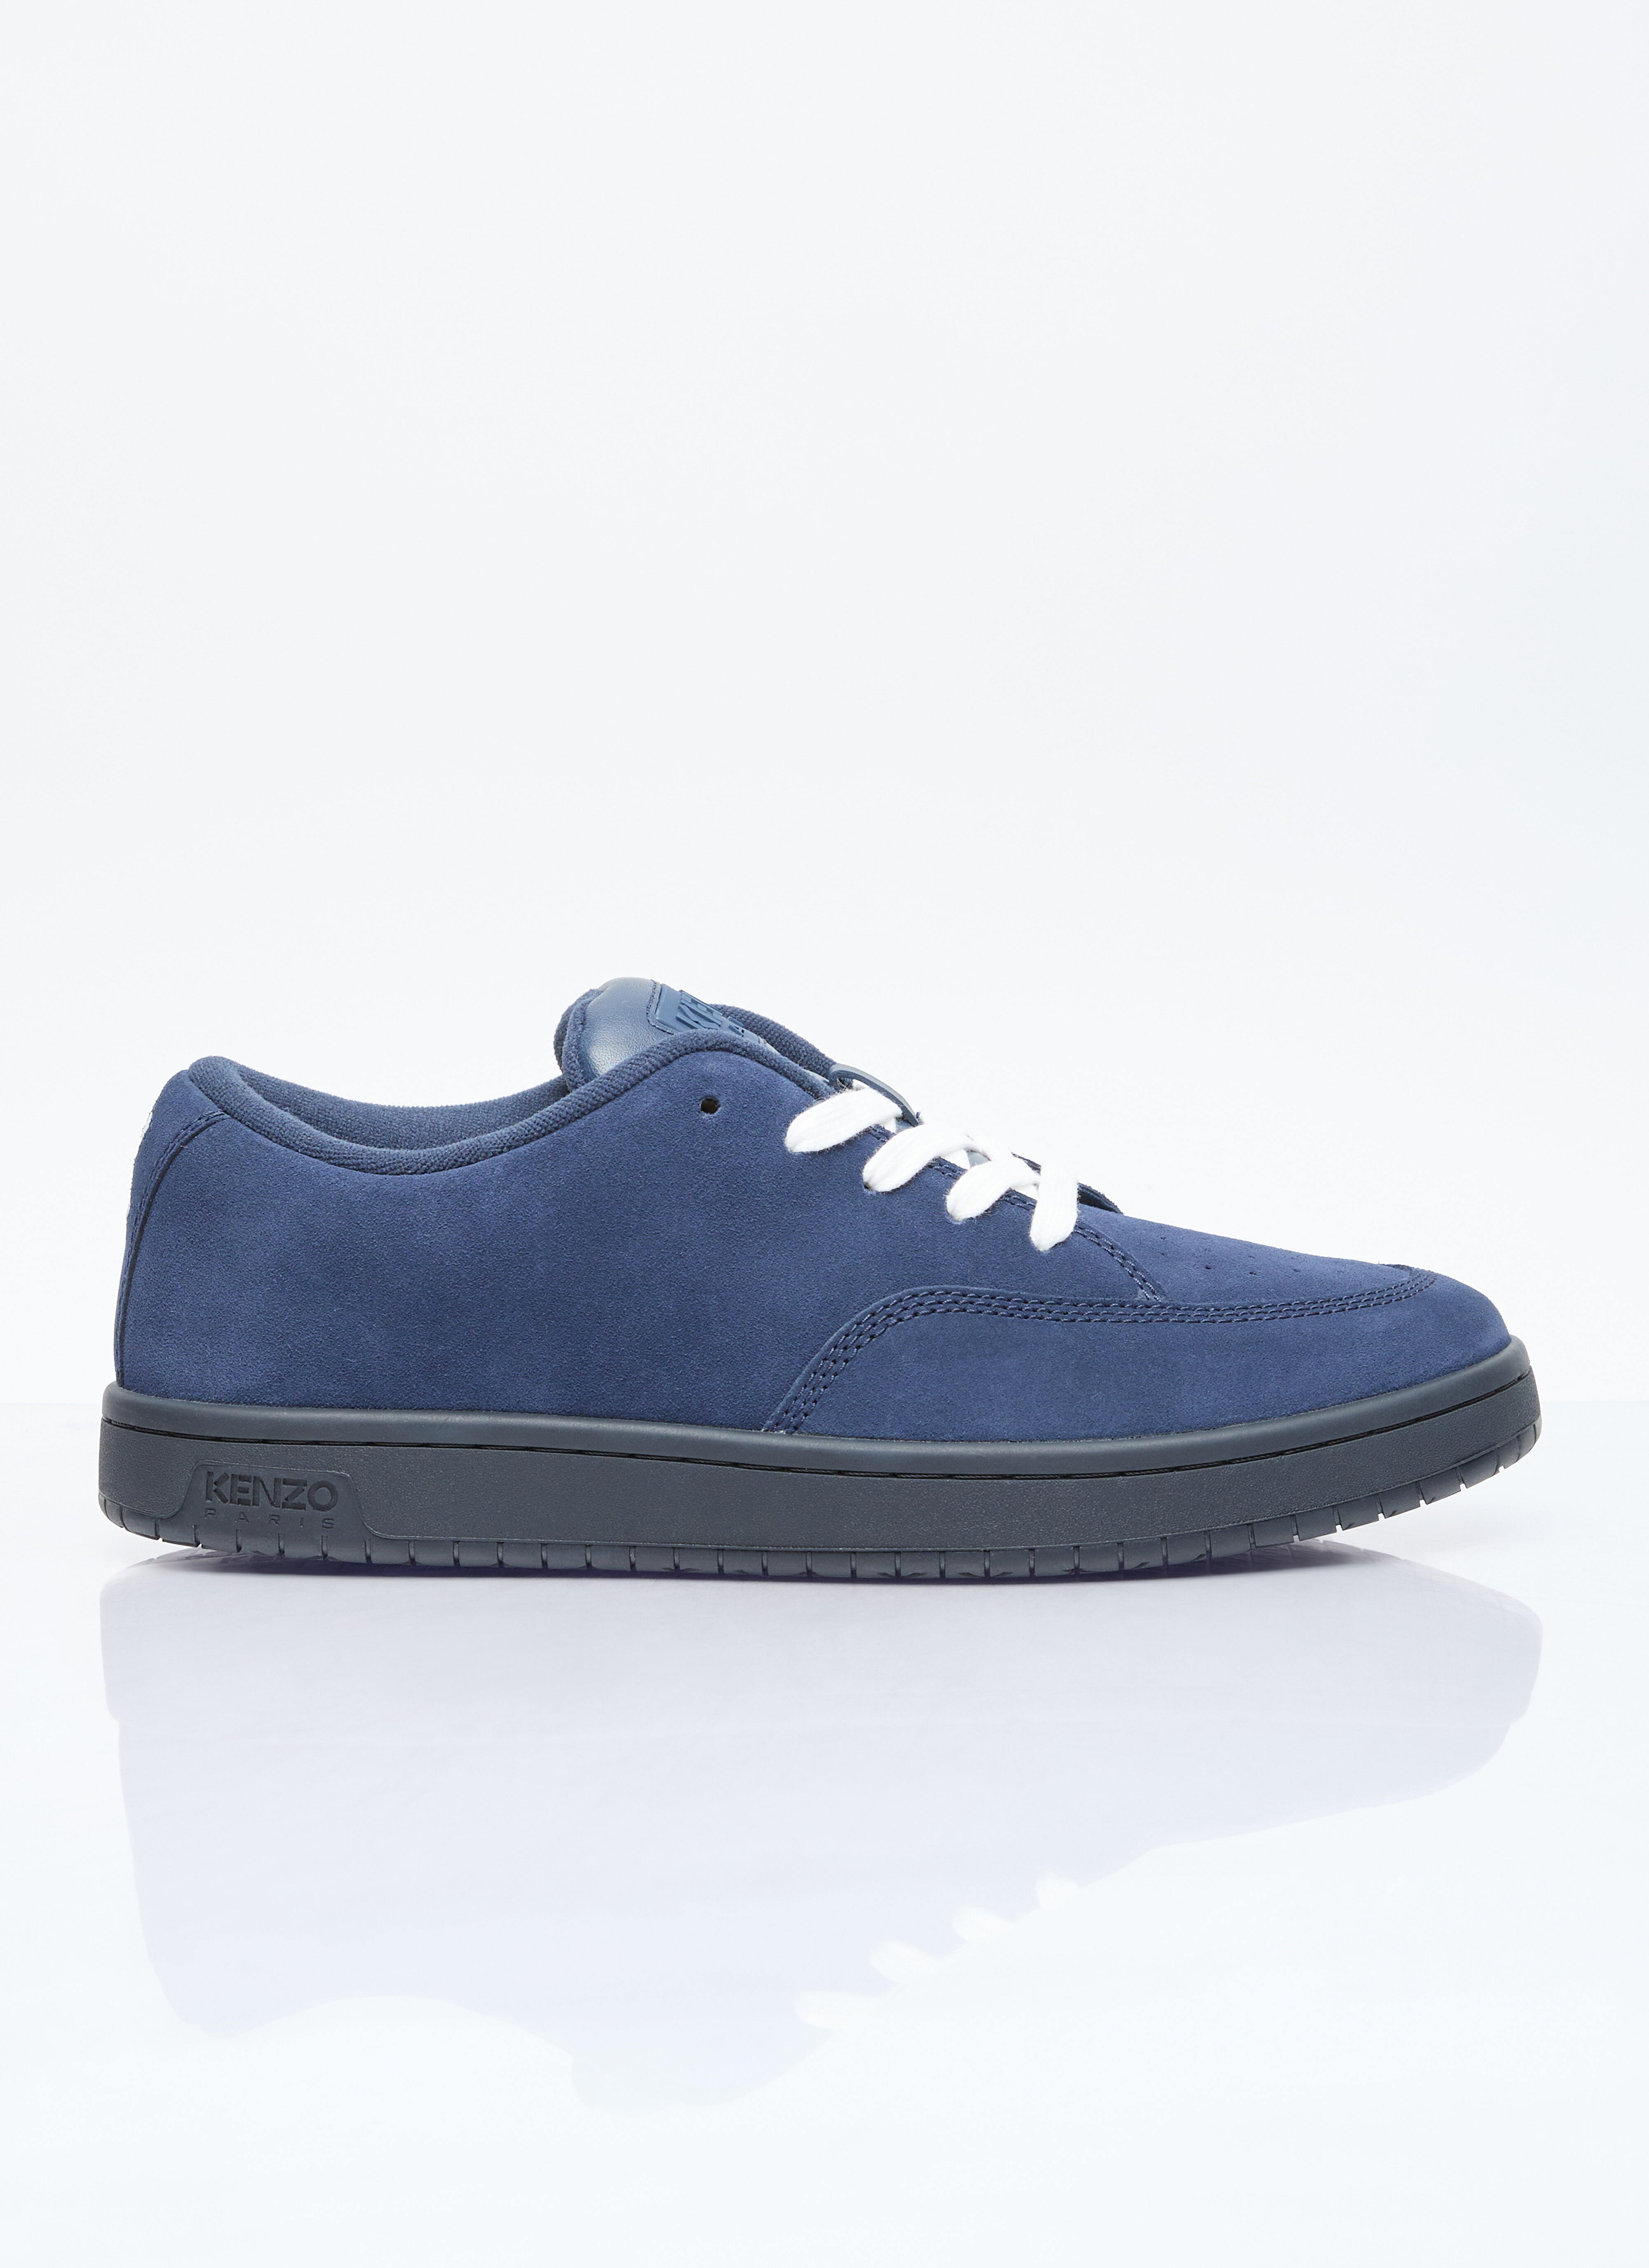 Kenzo x Levi's Dome Sneakers Blue klv0156002